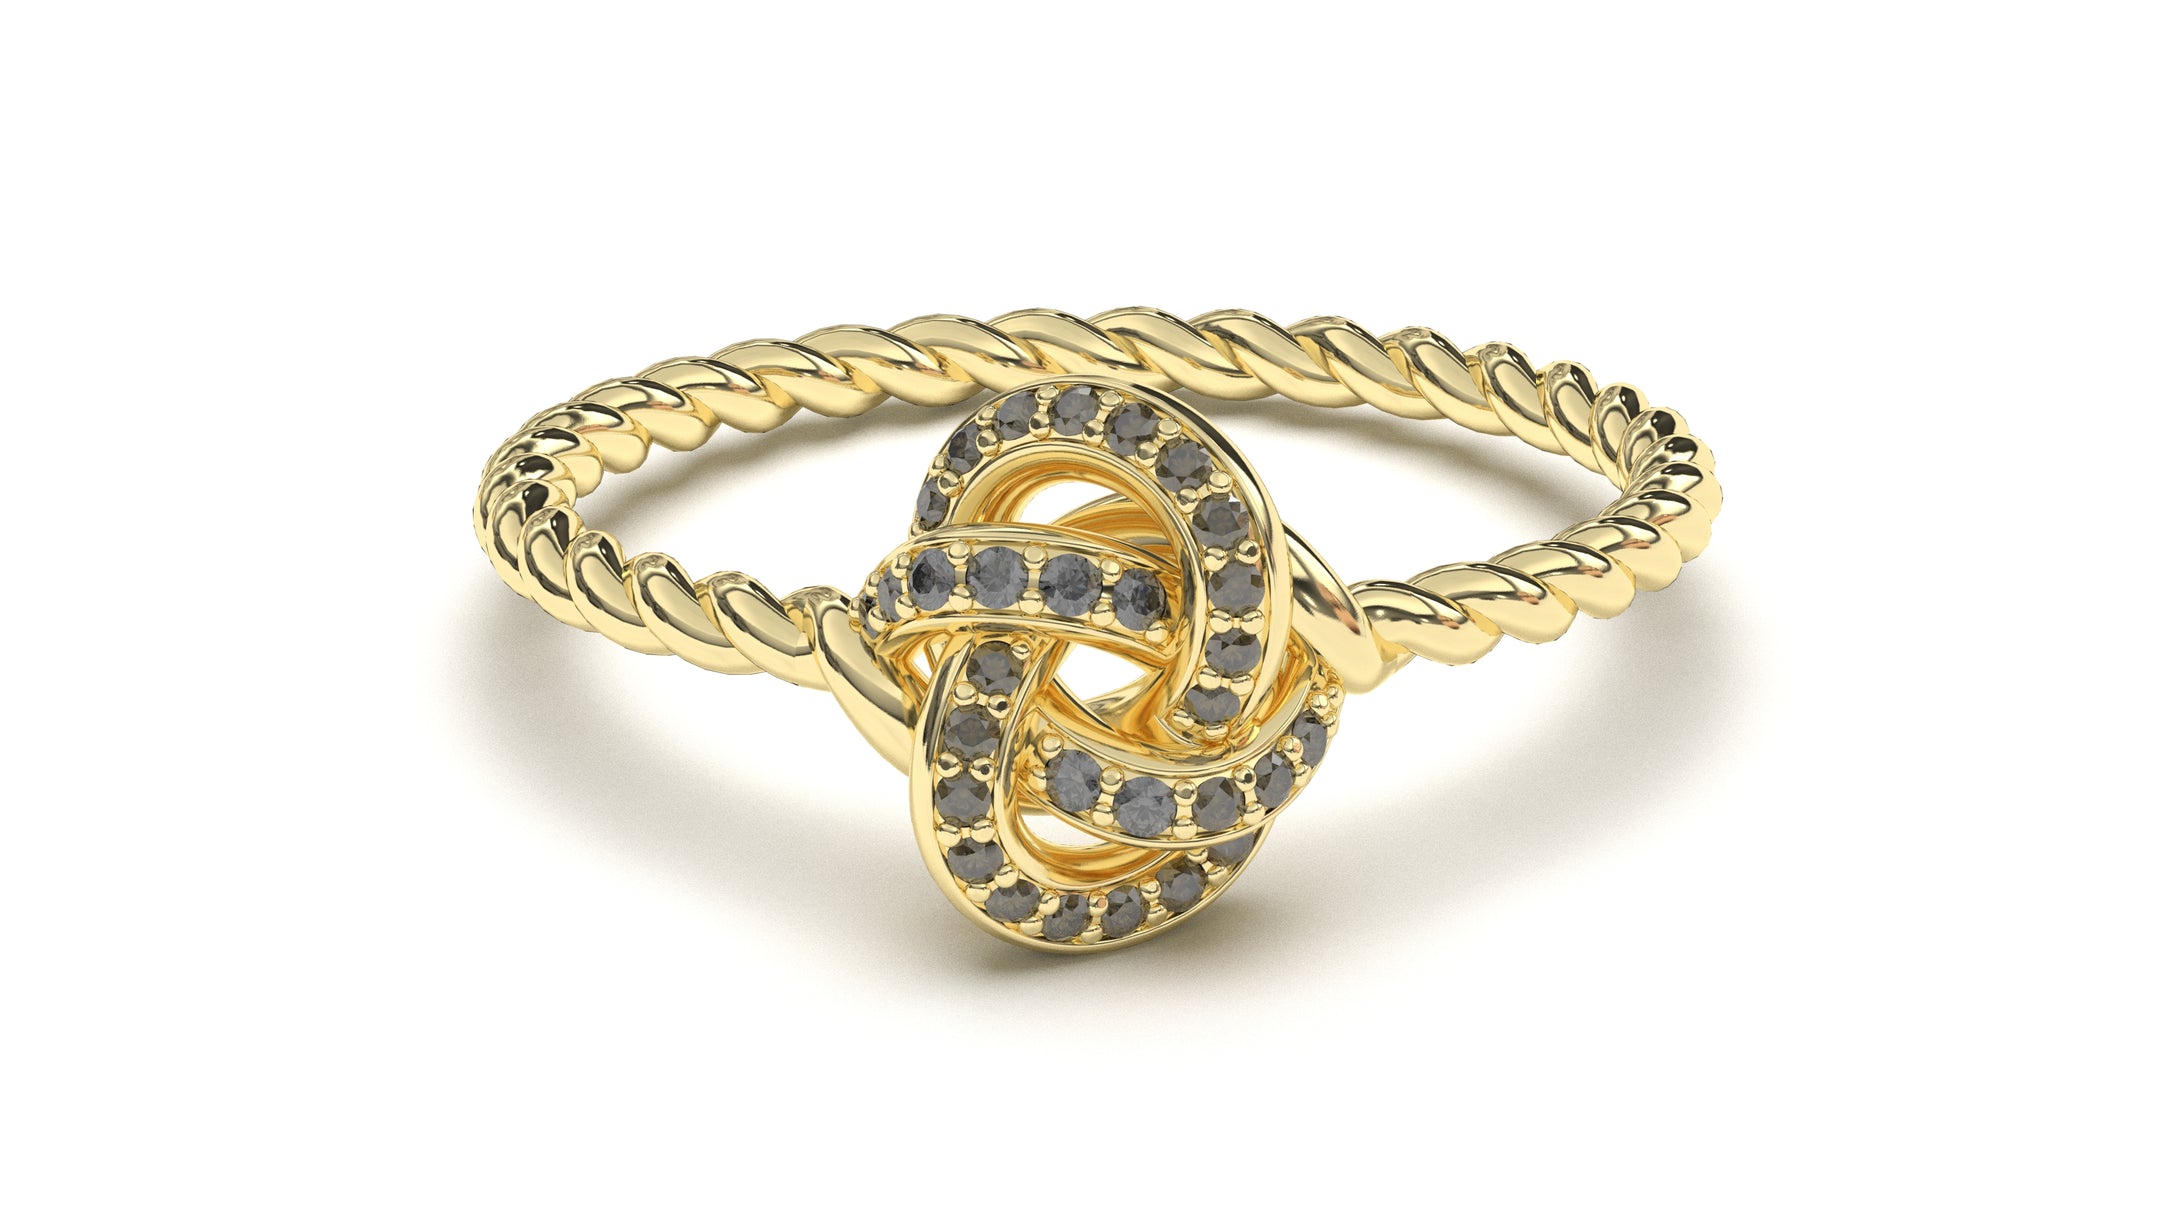 Braid Style Ring Set with Round Black Diamonds | Knots Twist VII